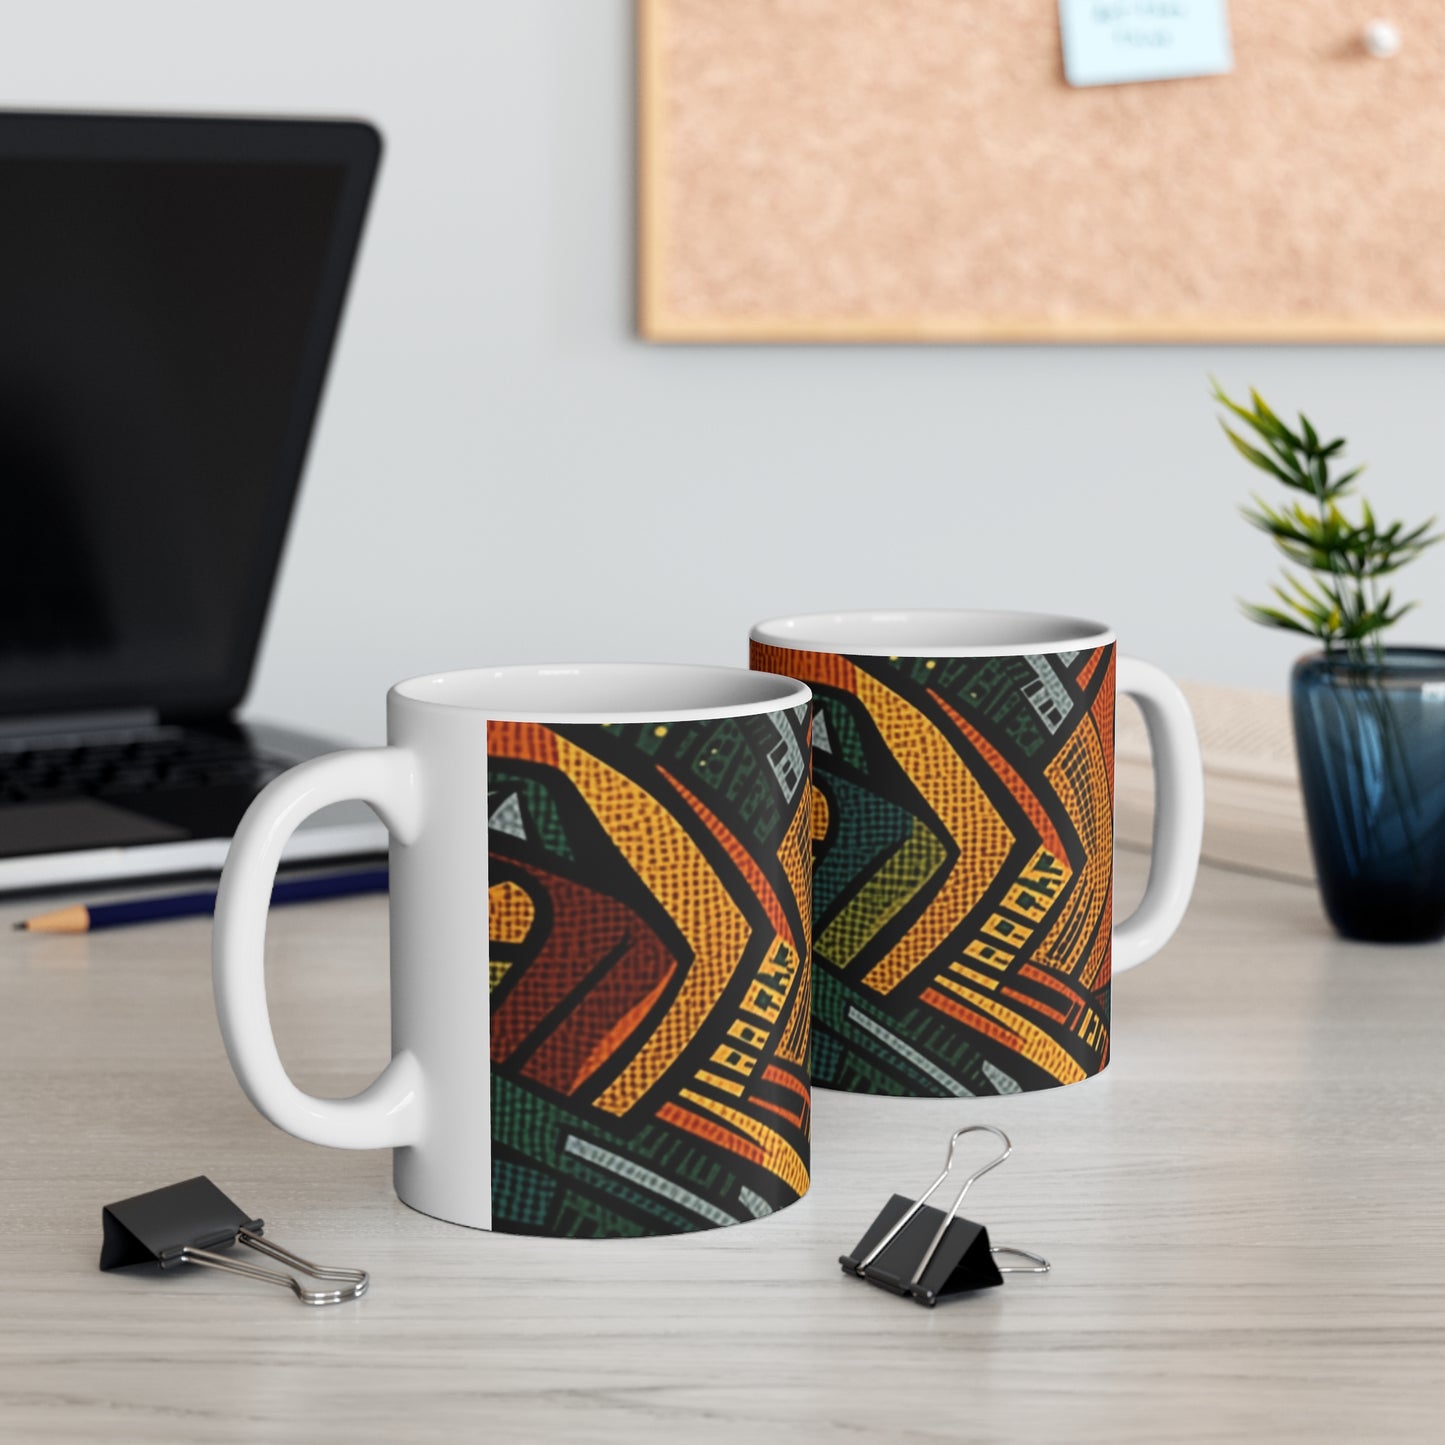 1960-1970s Style African Ornament Textile - Bold, Intricate Pattern - Ceramic Mug 11oz